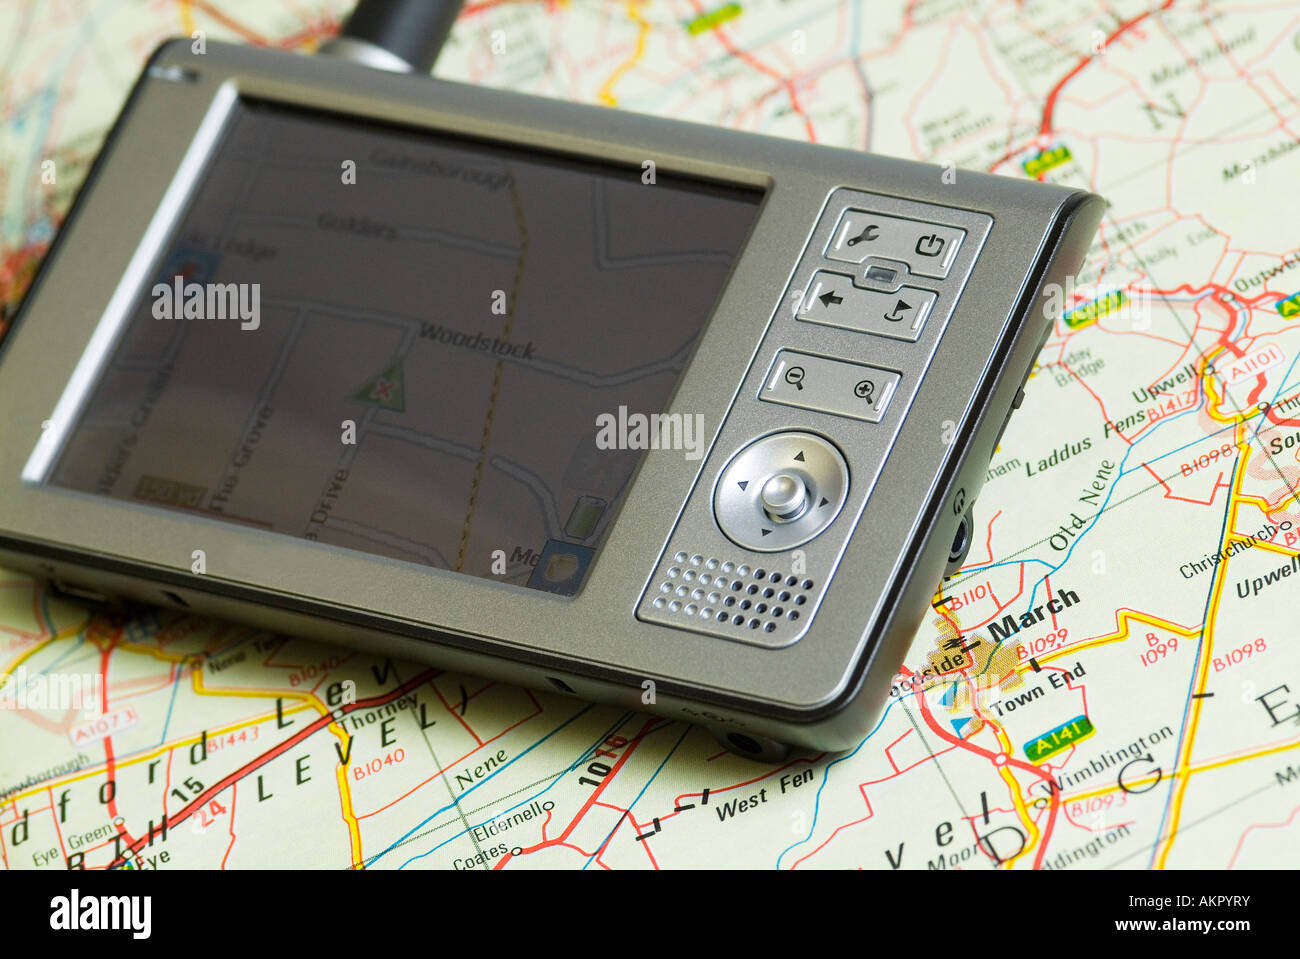 Personal navigation system resting on map, Sat nav Stock Photo